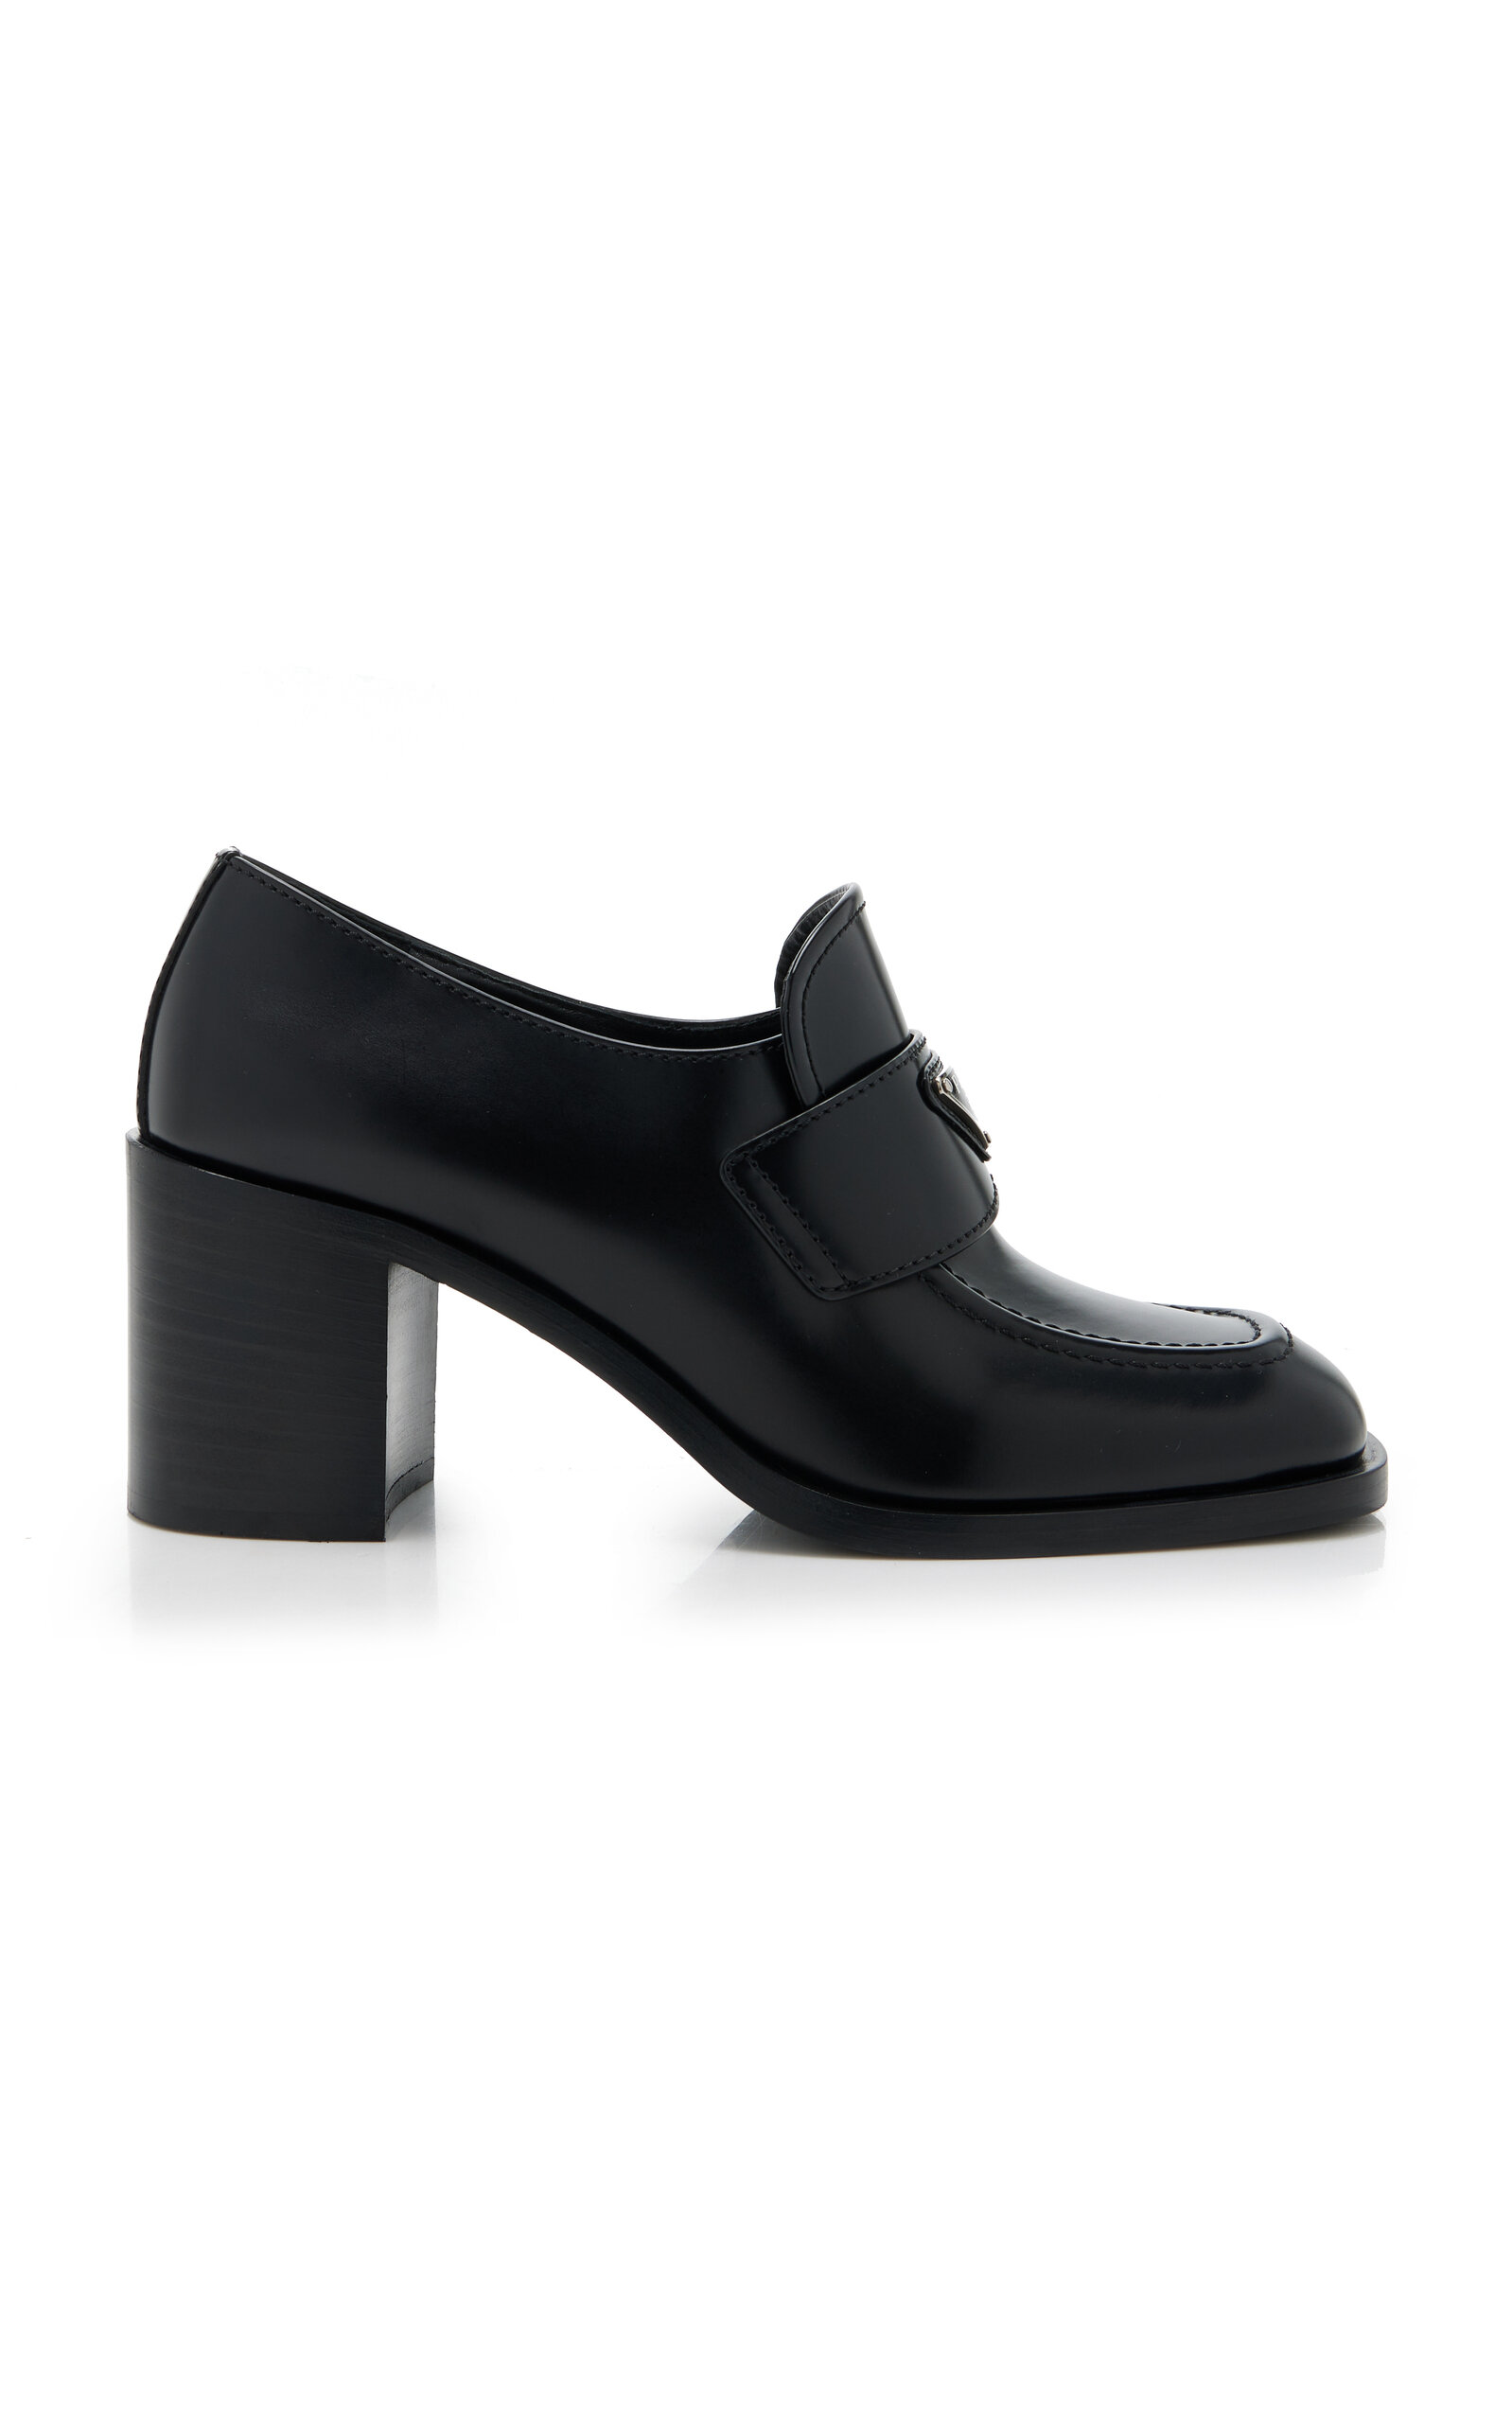 Prada - Mocassini Leather Loafers               - Black - IT 38 - Moda Operandi